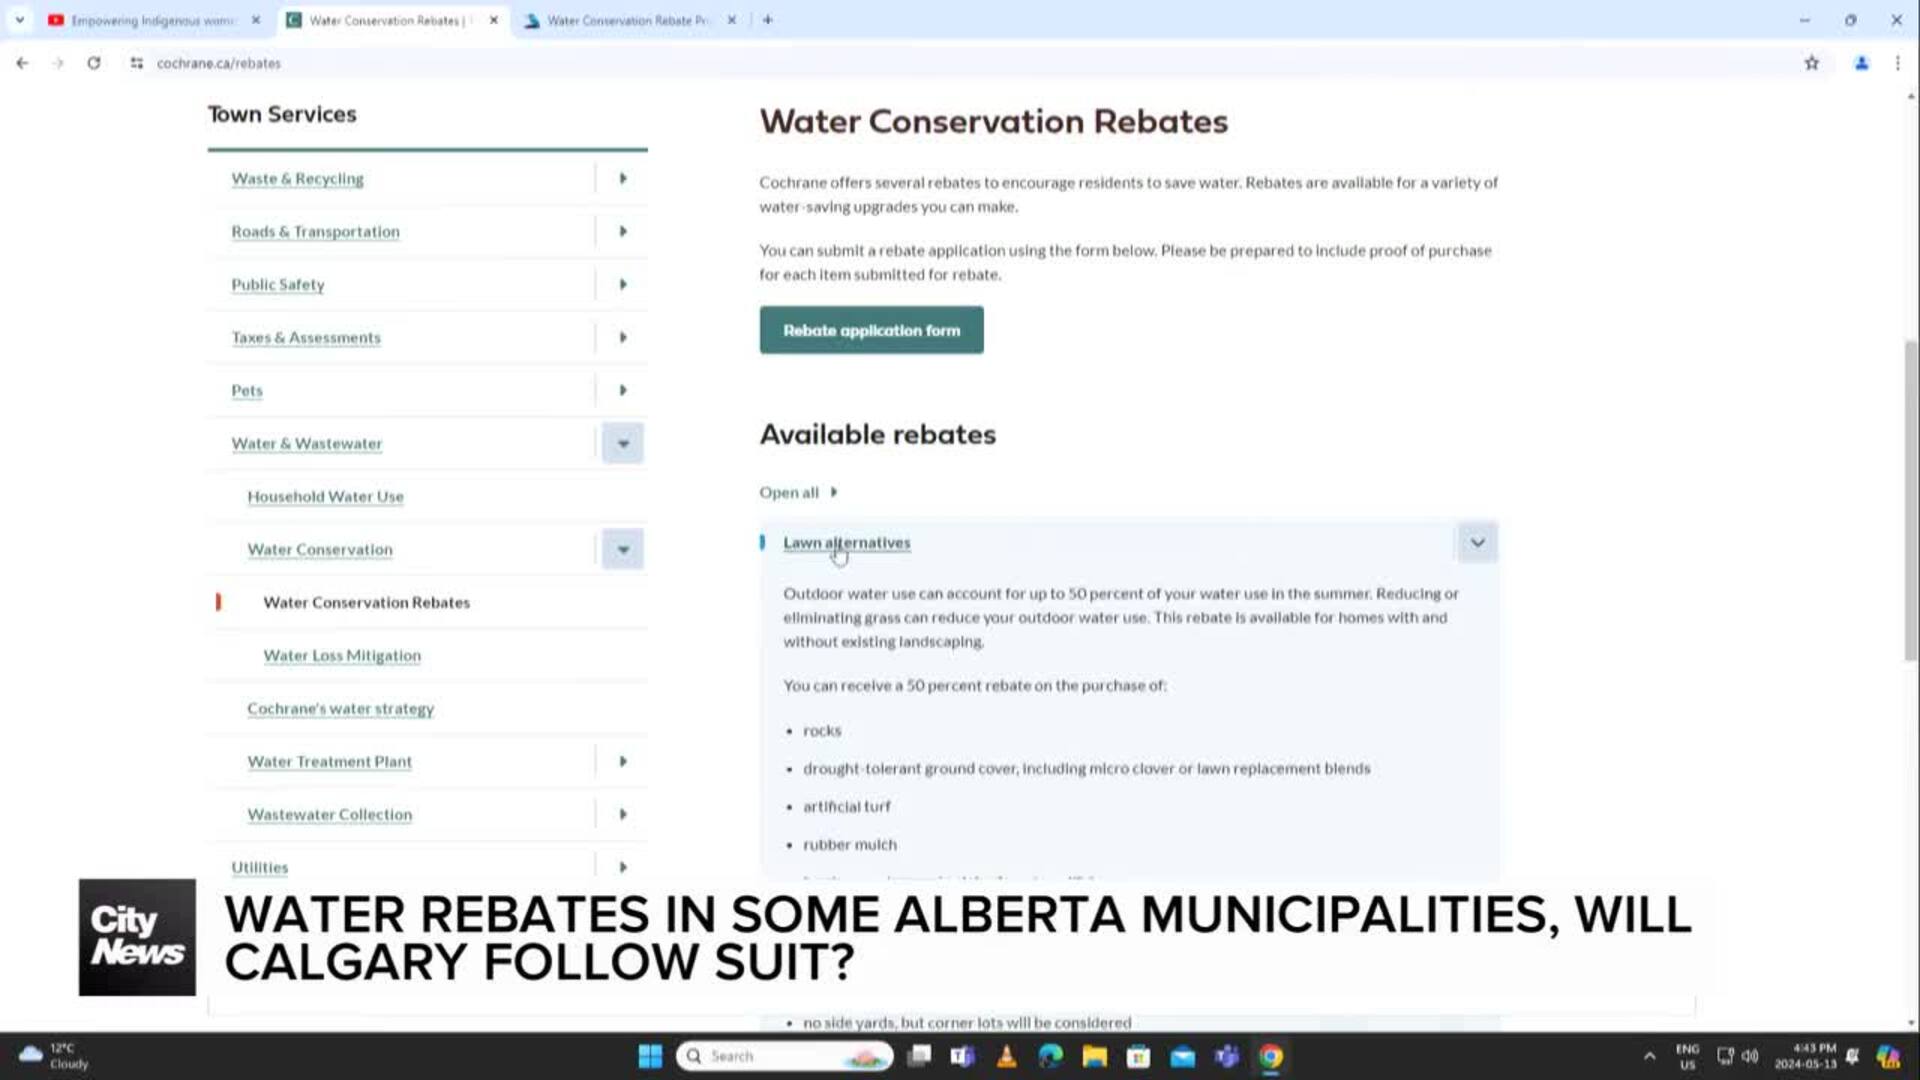 Water rebates in some Alberta municipalities, will Calgary follow suit?